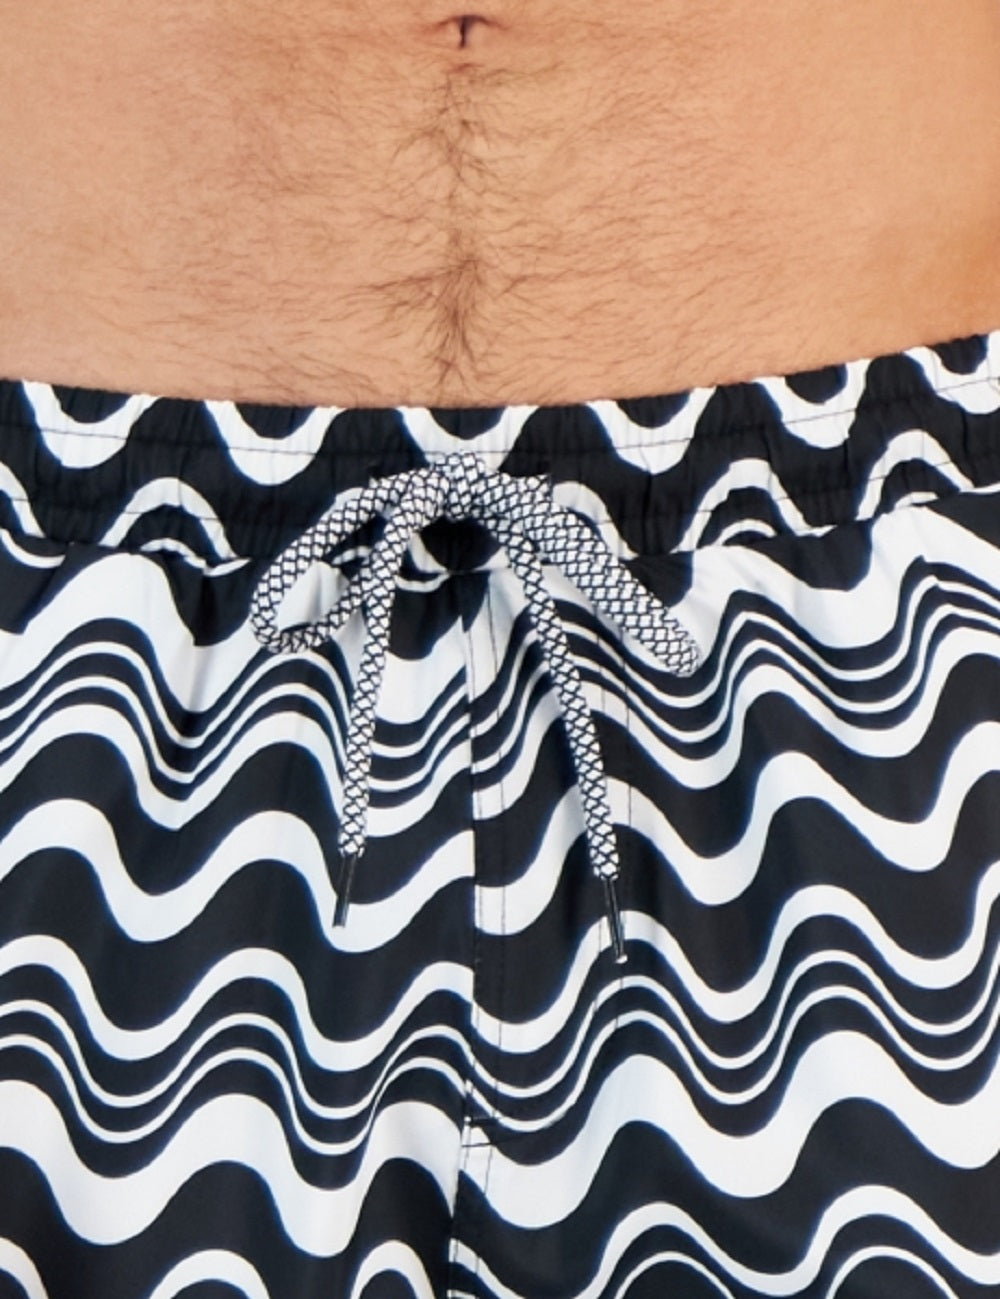 INC International Concepts Men's Wave Print Swim Shorts Black Size X-Large